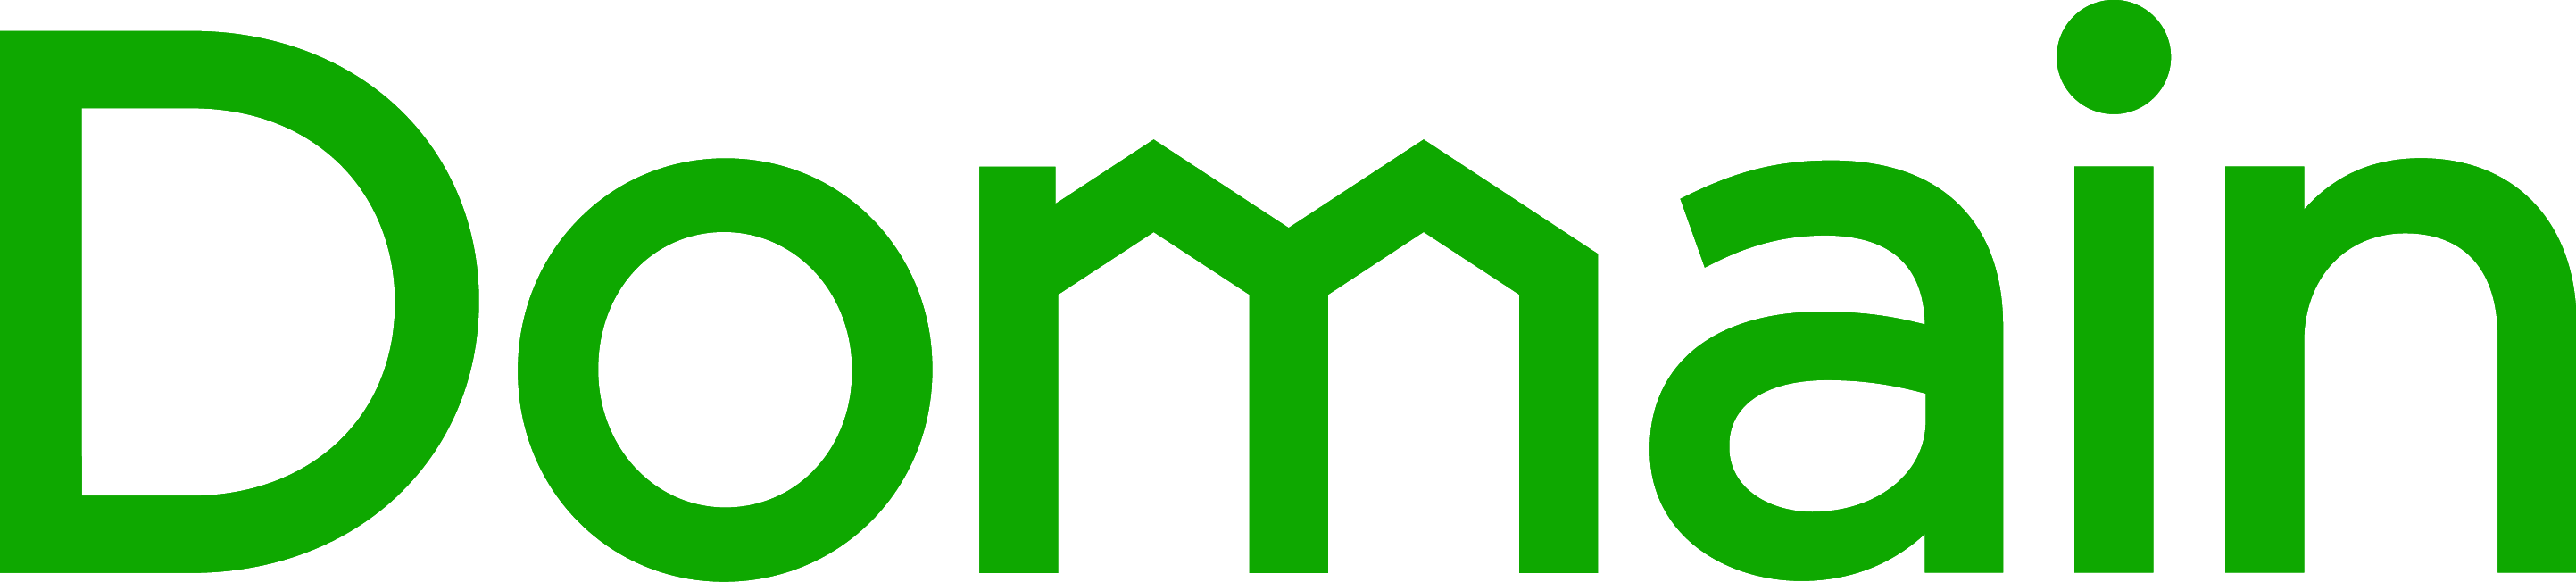 Brilley-Domain-logo